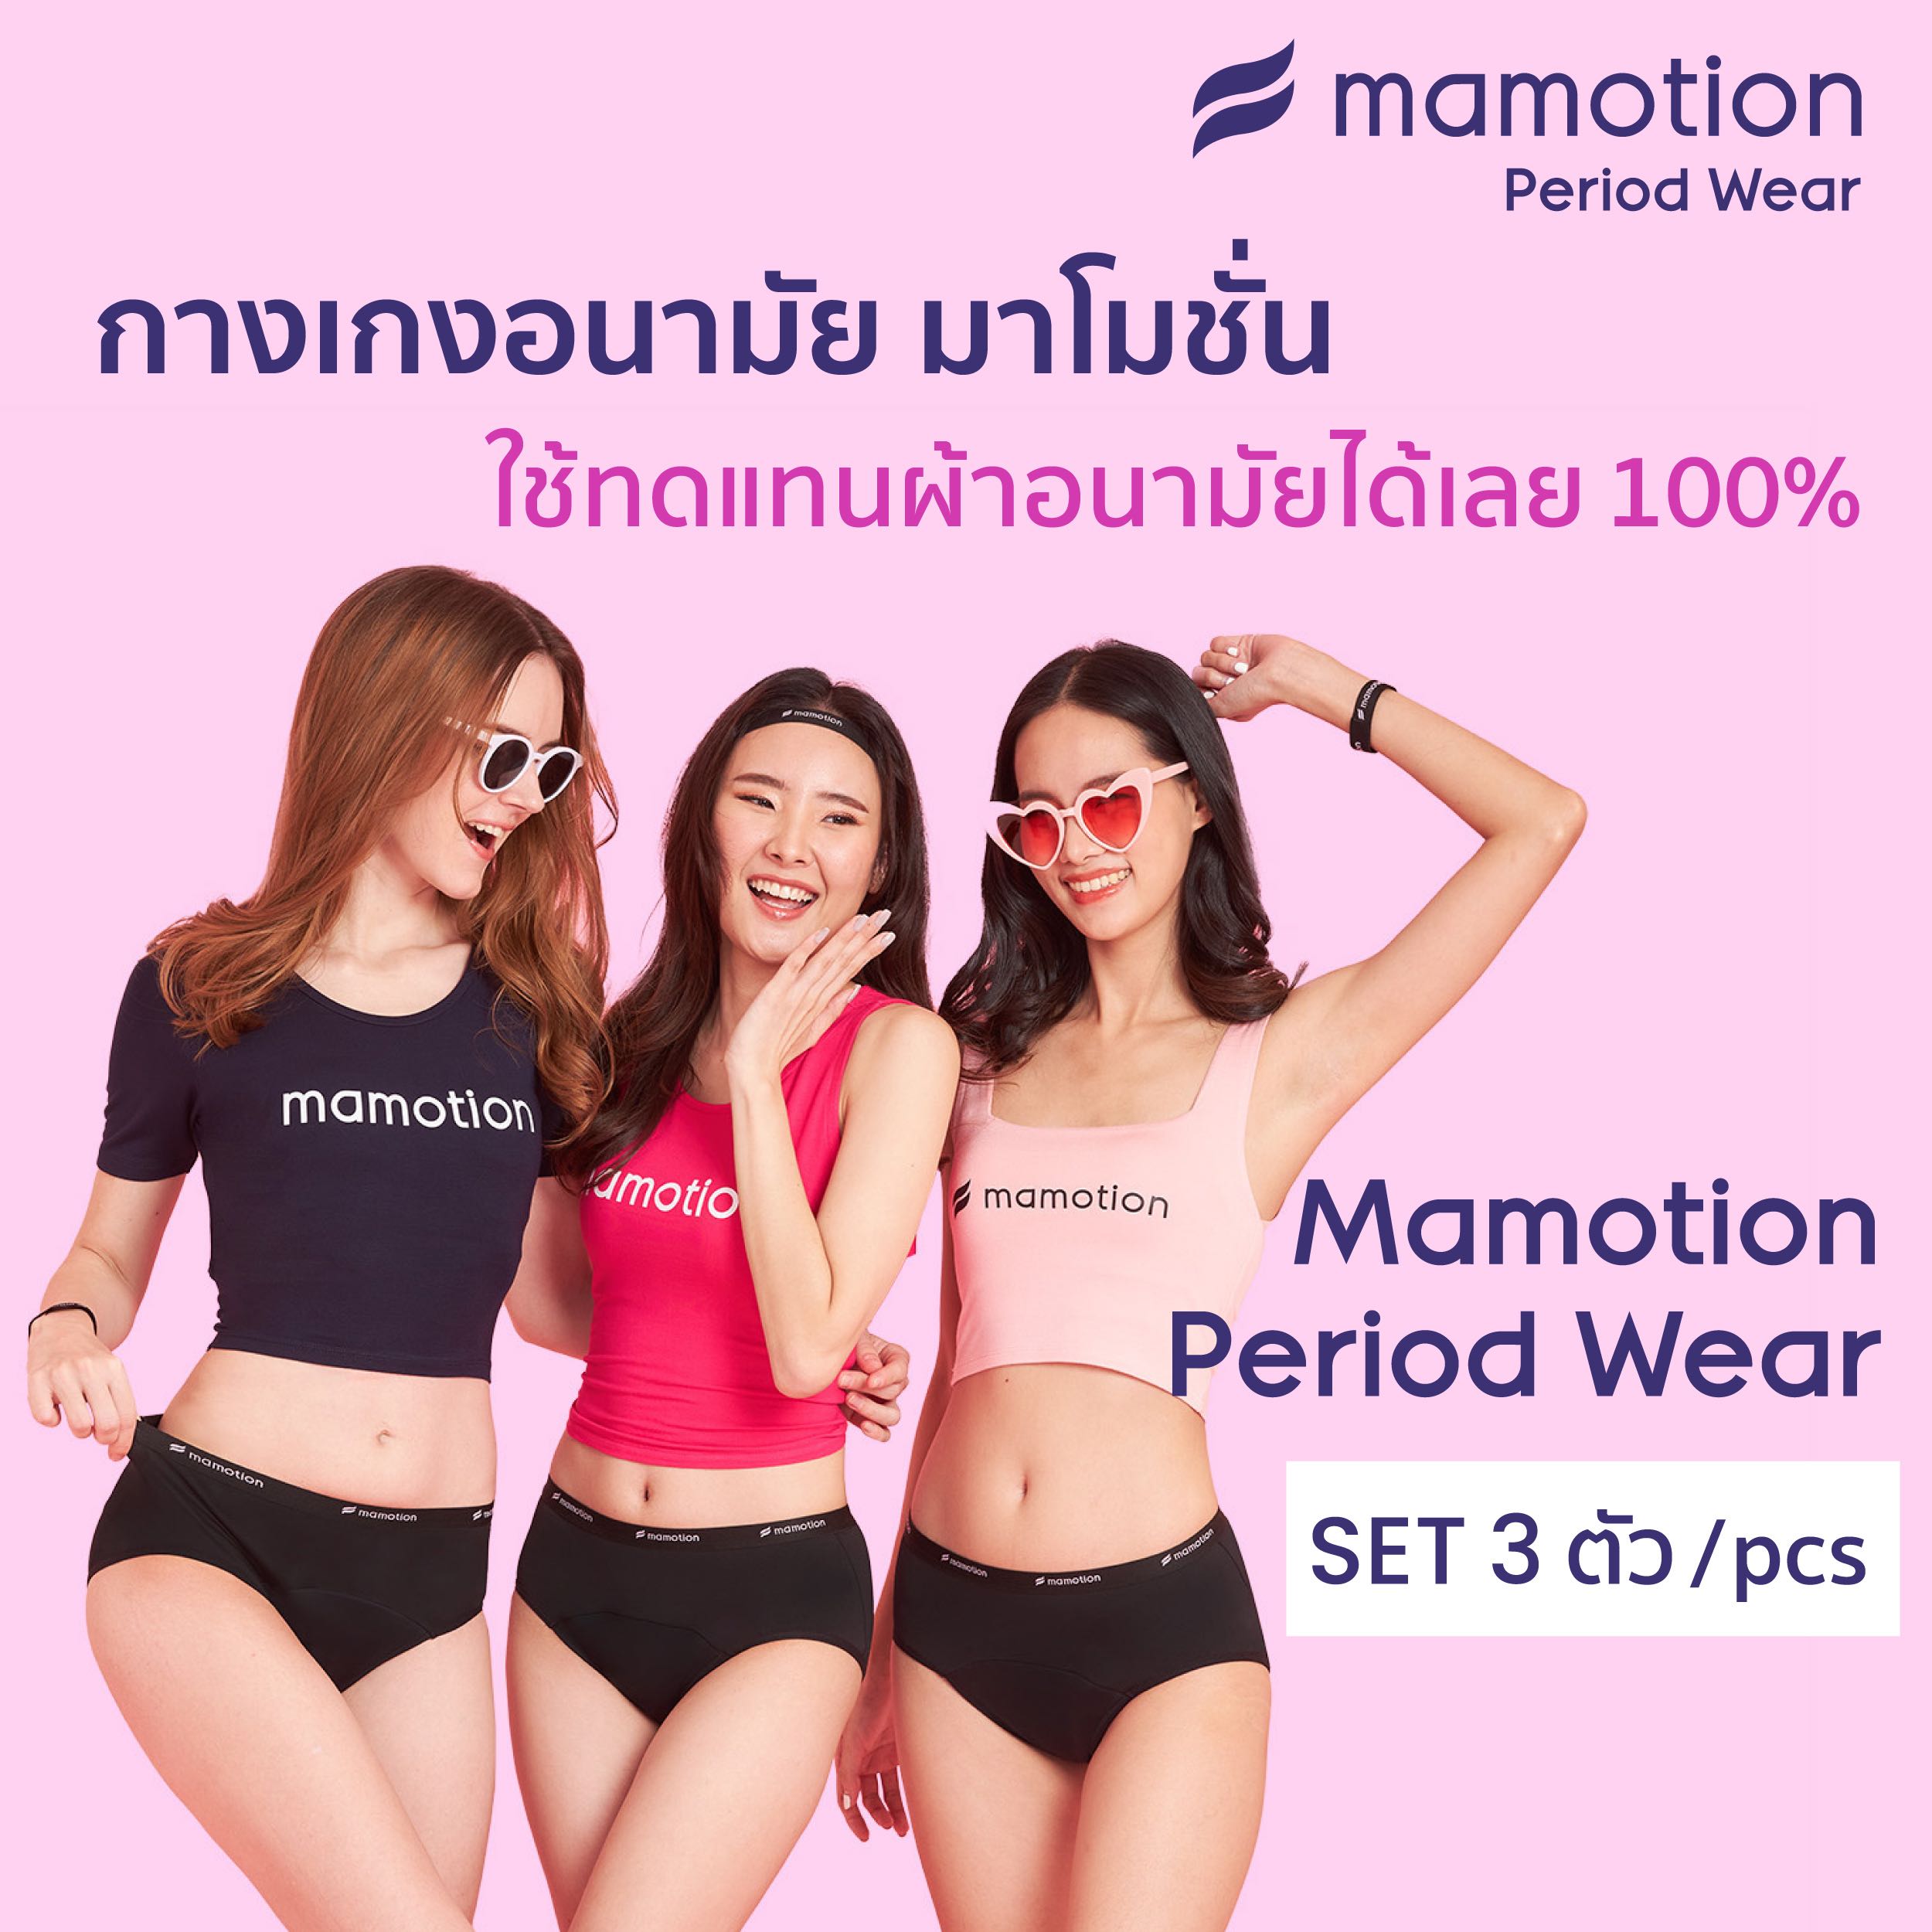 Set 3 ตัว - Mamotion Period Wear (กางเกงอนามัย Mamotion) - รุ่น Brief Max (Freedom Collection)